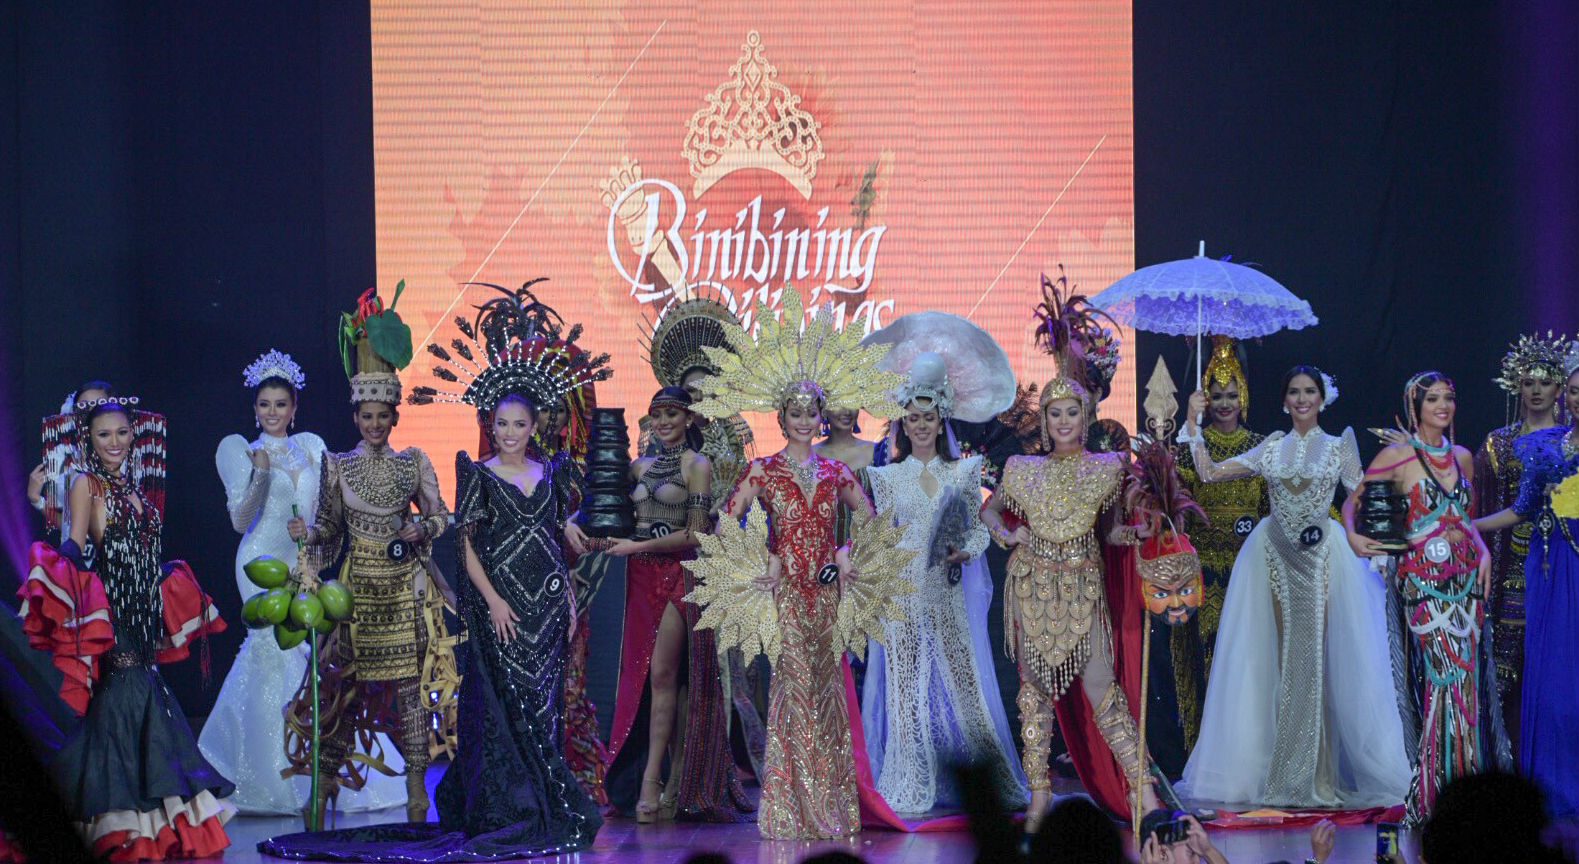 IN PHOTOS: National costumes at Binibining Pilipinas 2018